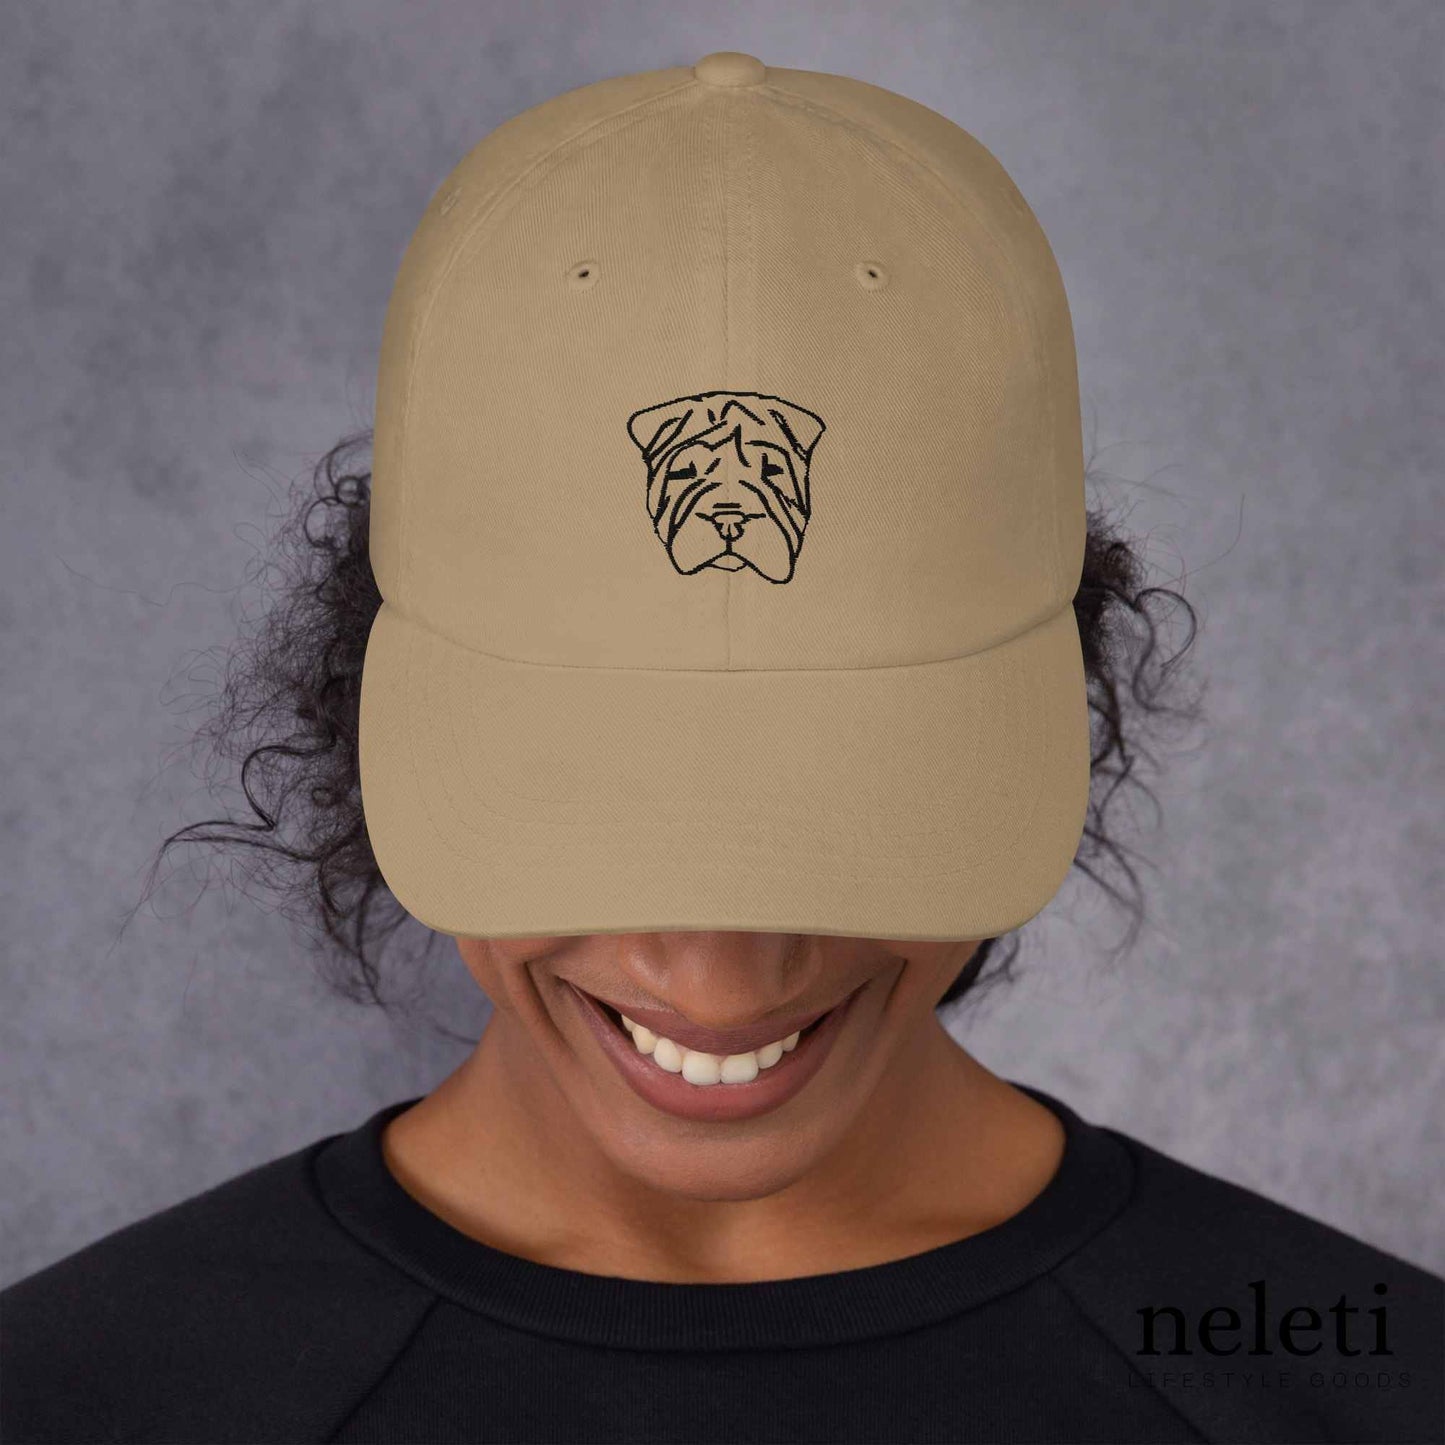 khaki-baseball-cap-with-embroidered-dog-face